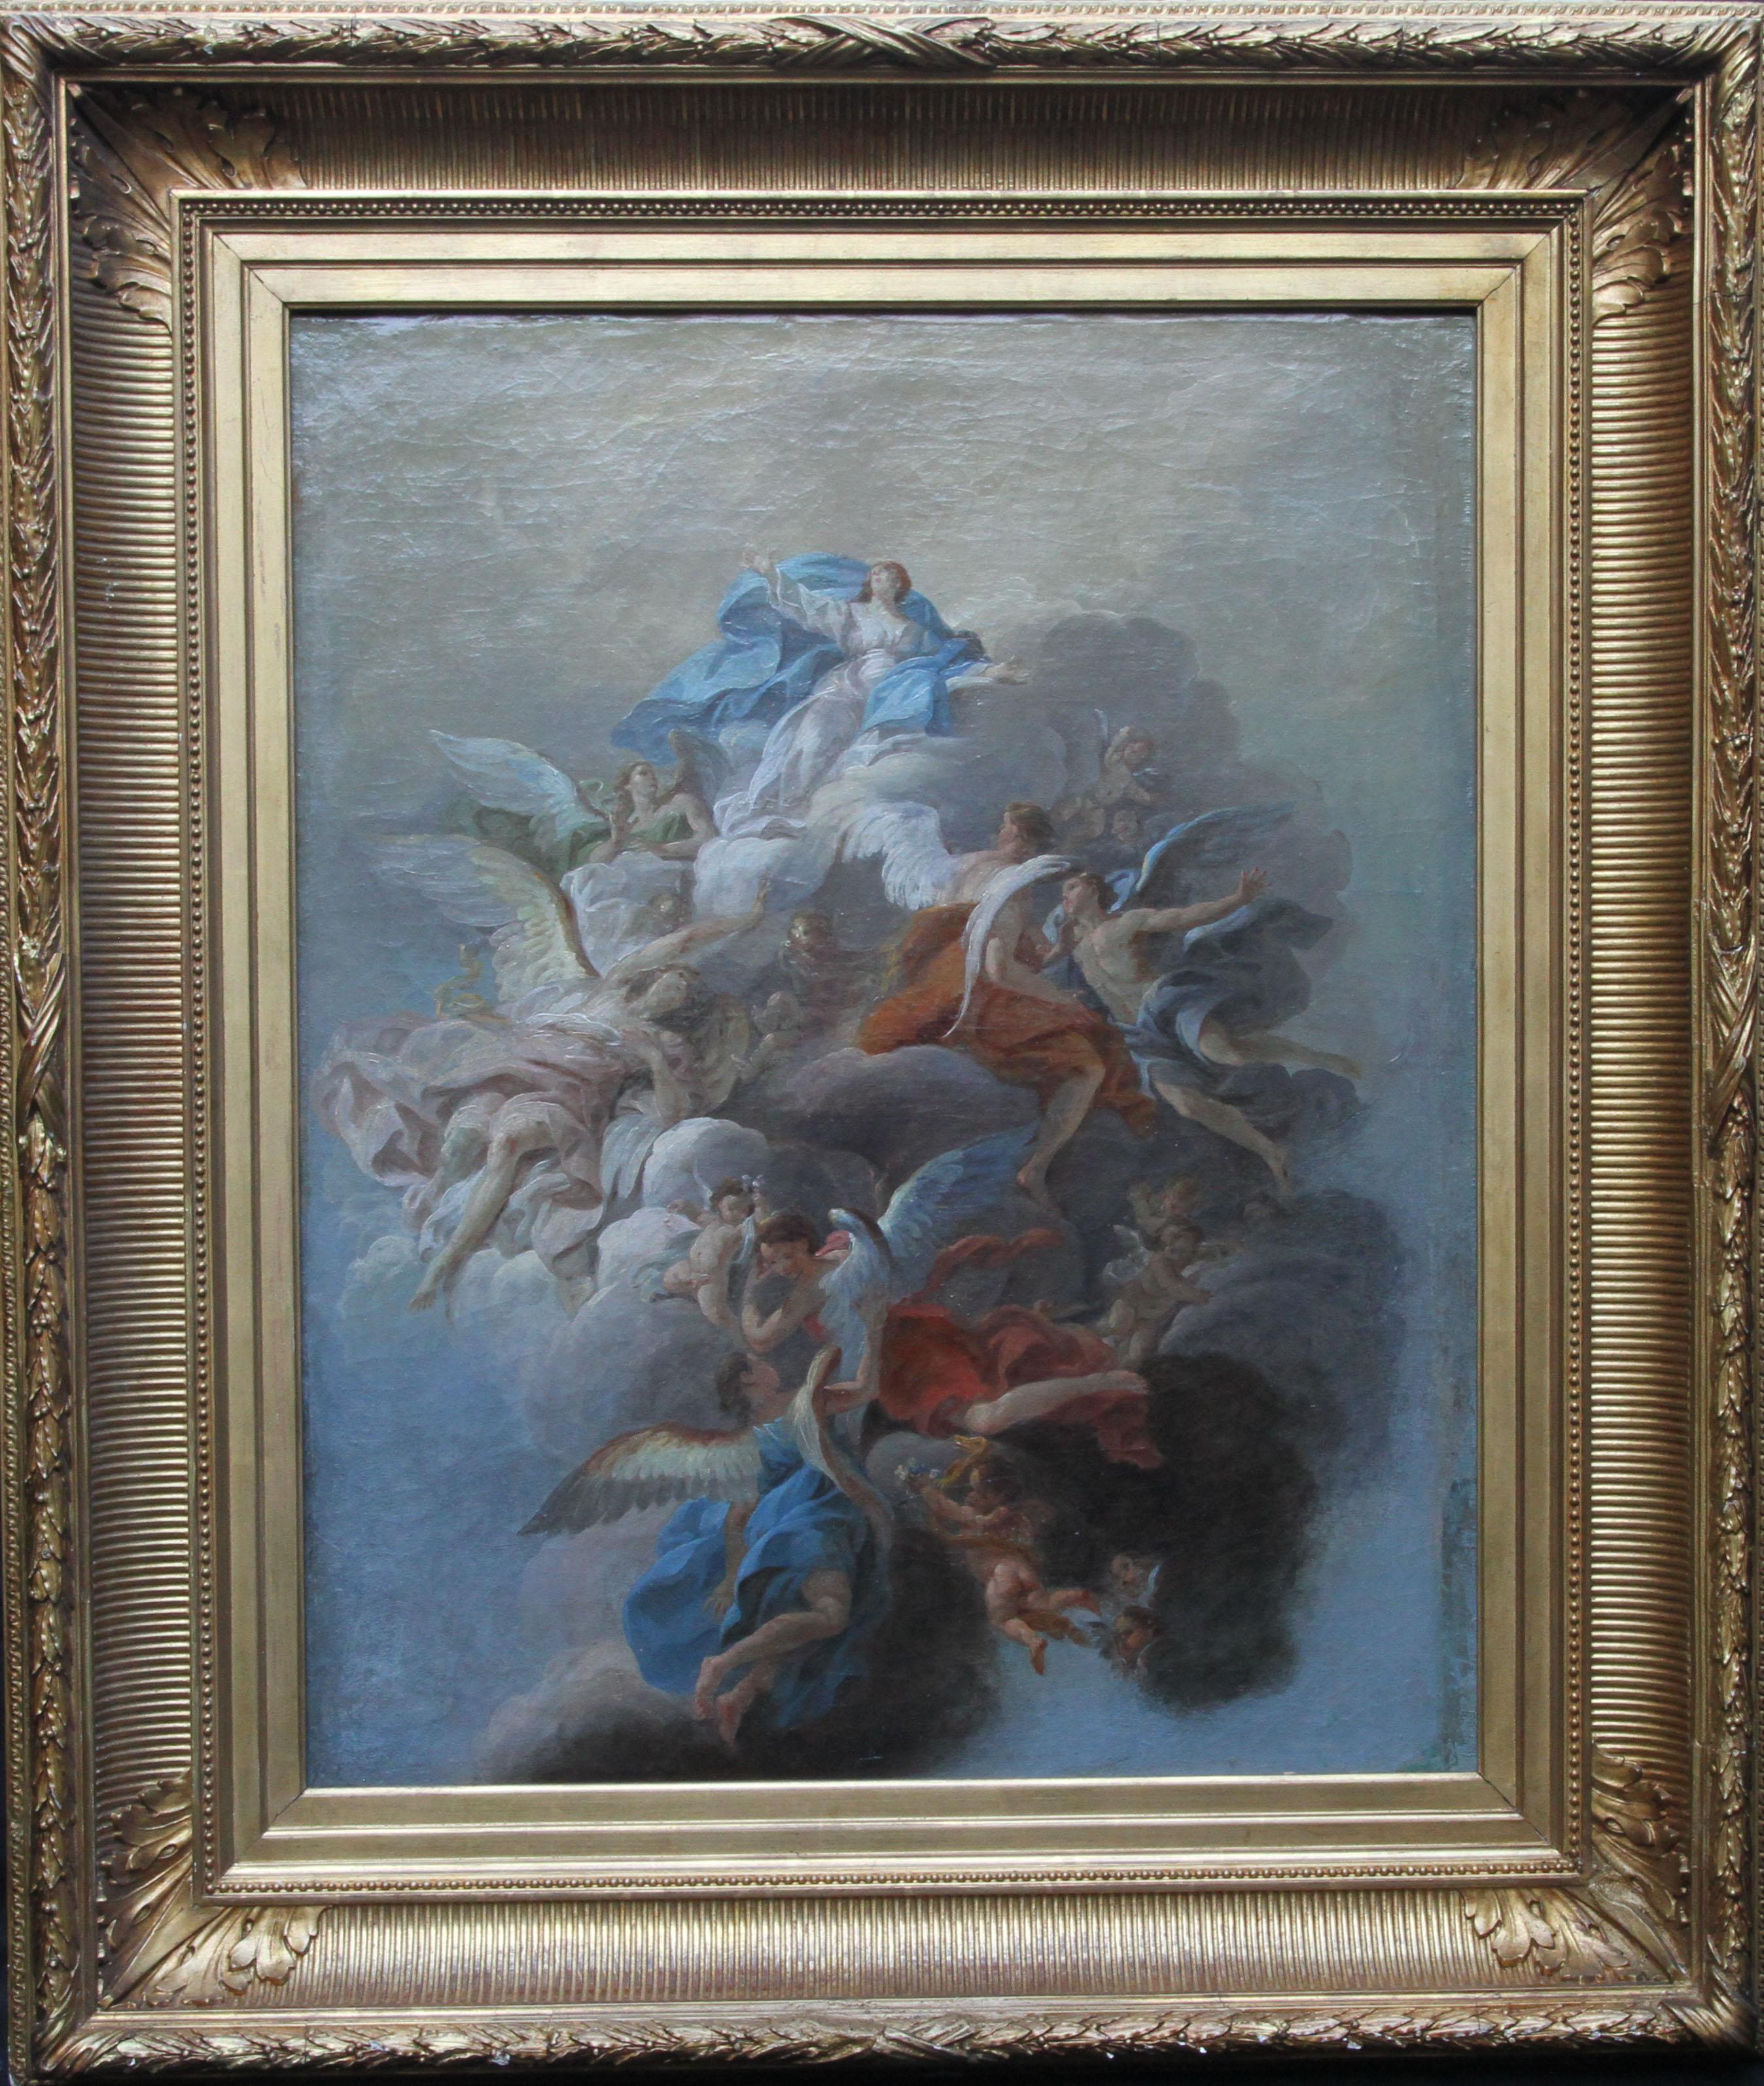 François Lemoyne Portrait Painting - The Assumption - French Renaissance  Old Master religious oil painting